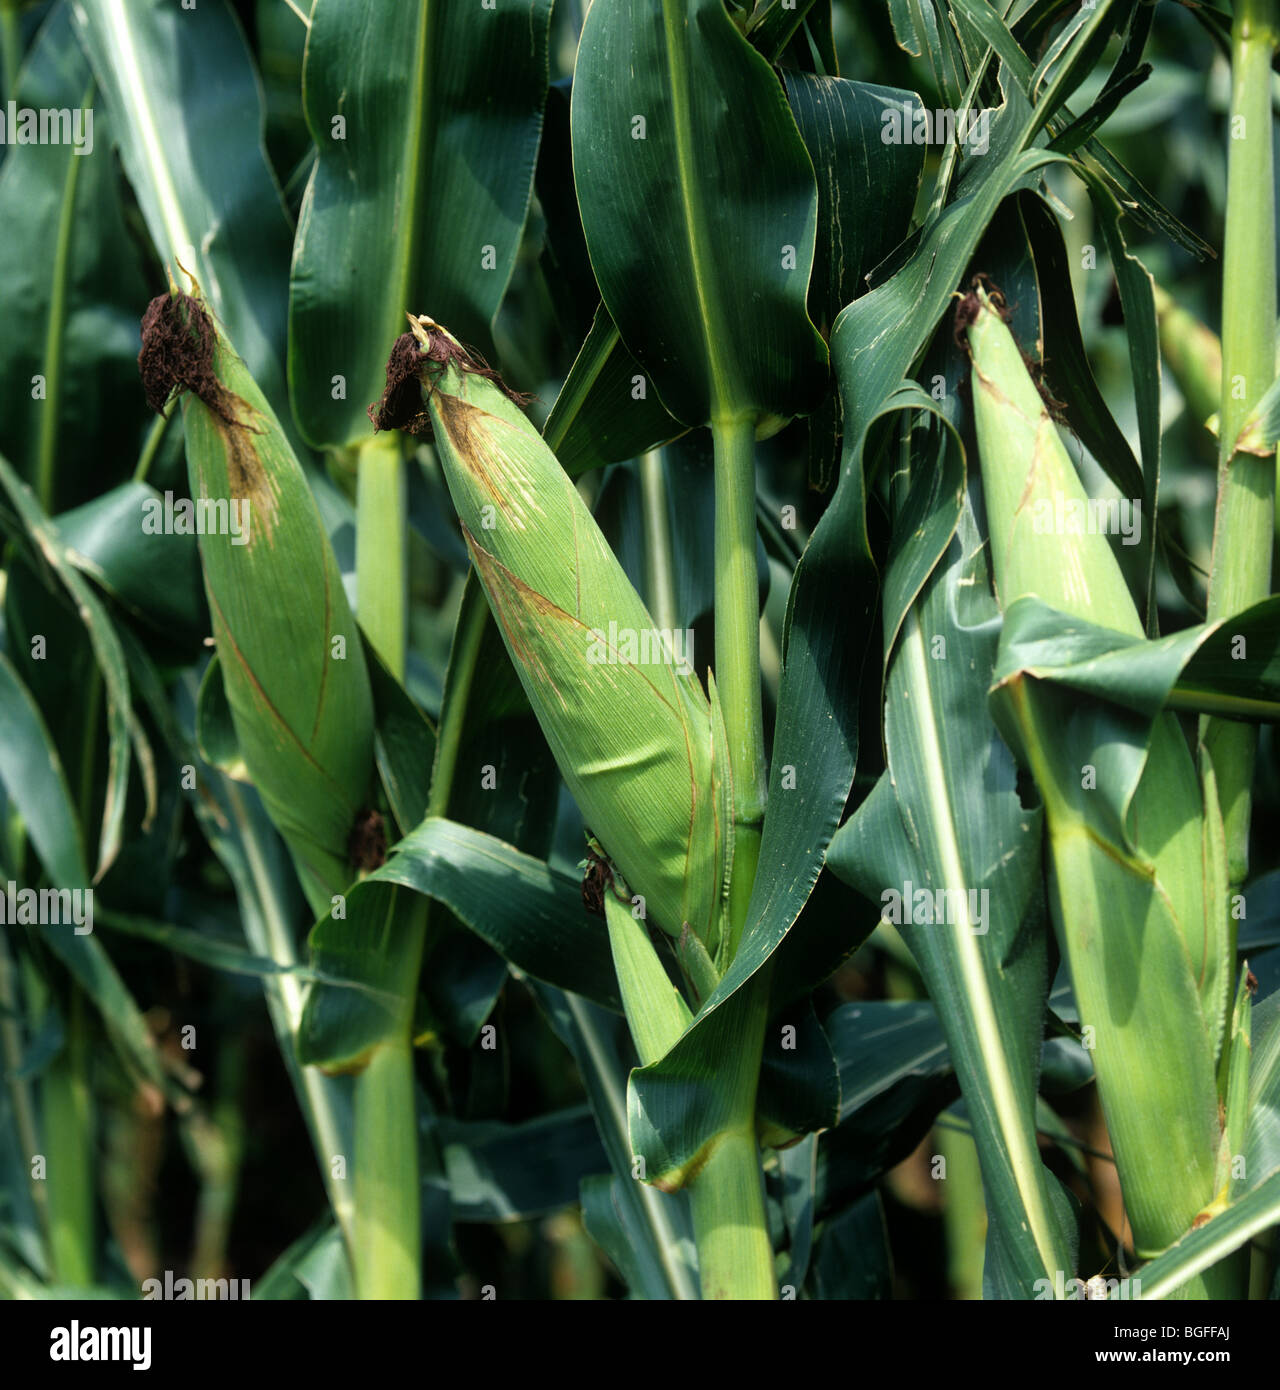 Mature maize or corn cob on the plant, Illinois, USA Stock Photo